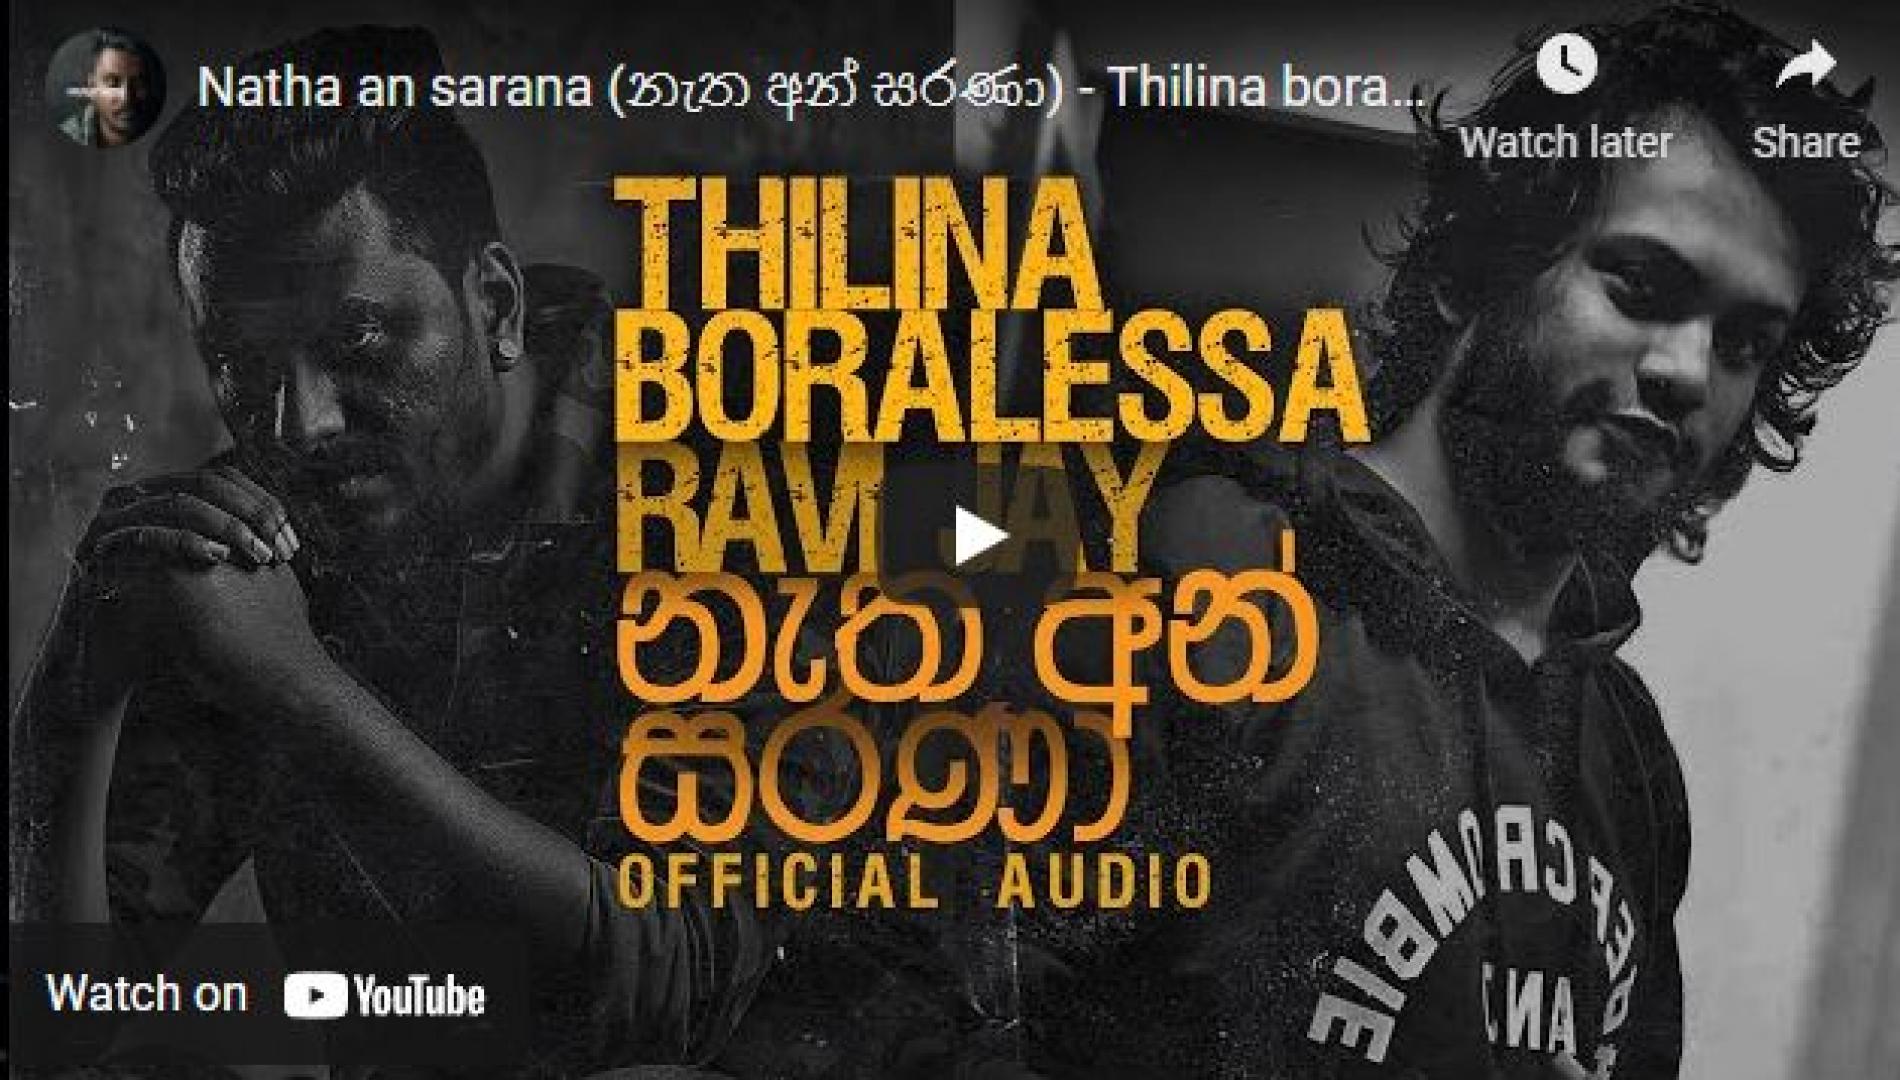 New Music : Natha An Sarana (නැත අන් සරණා) – Thilina Boralessa x Ravi jay (Official Audio)